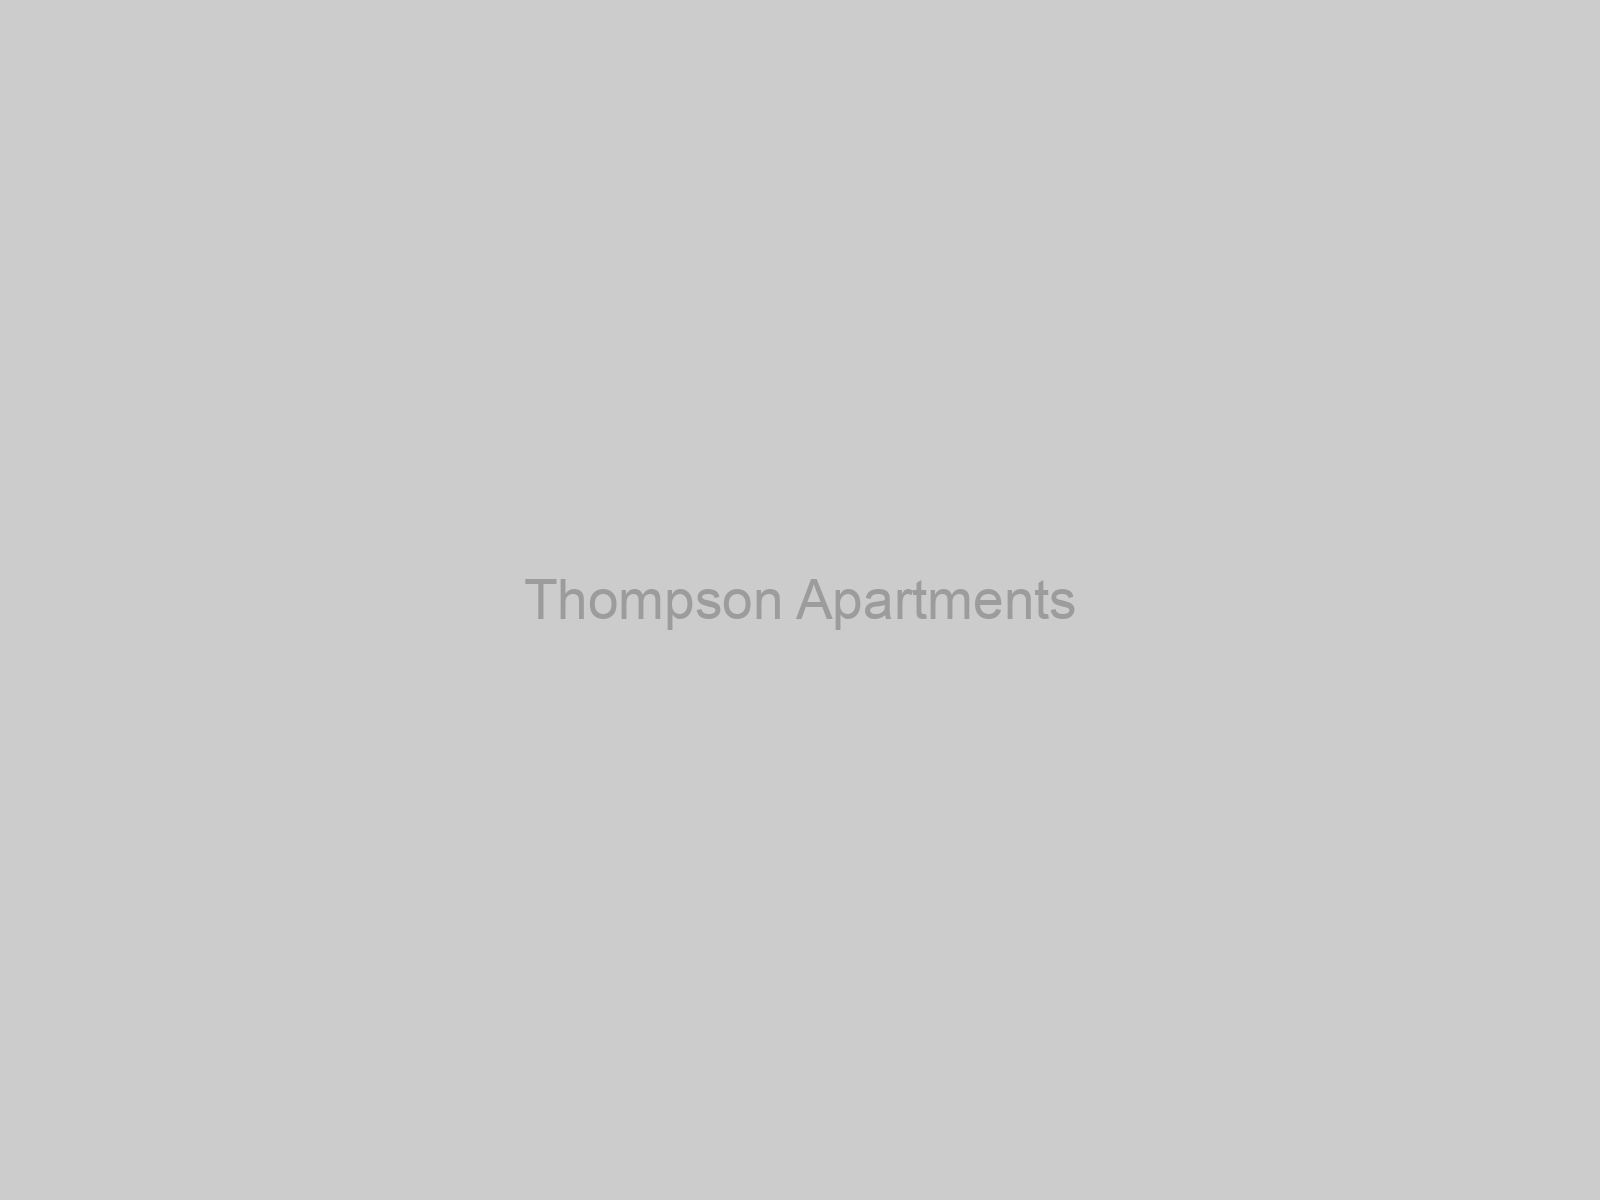 Thompson Apartments